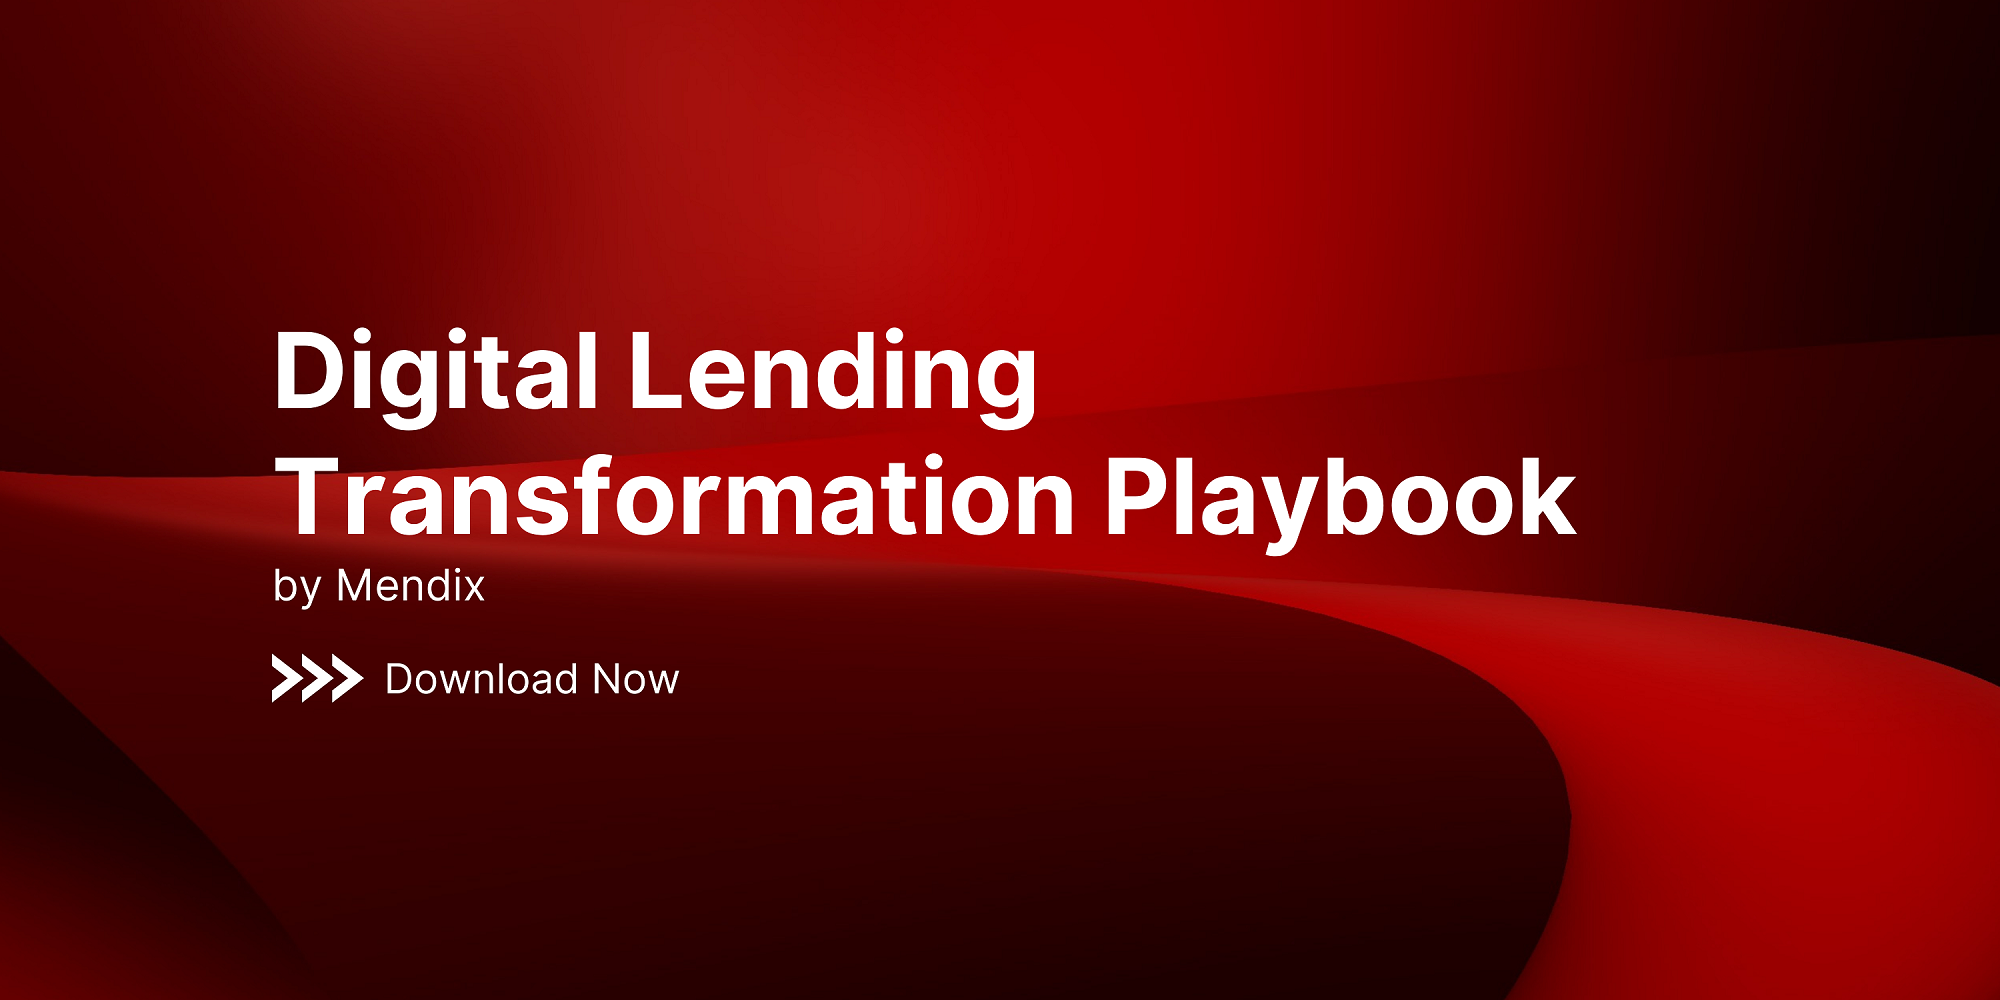 Digital Lending Transformation Playbook